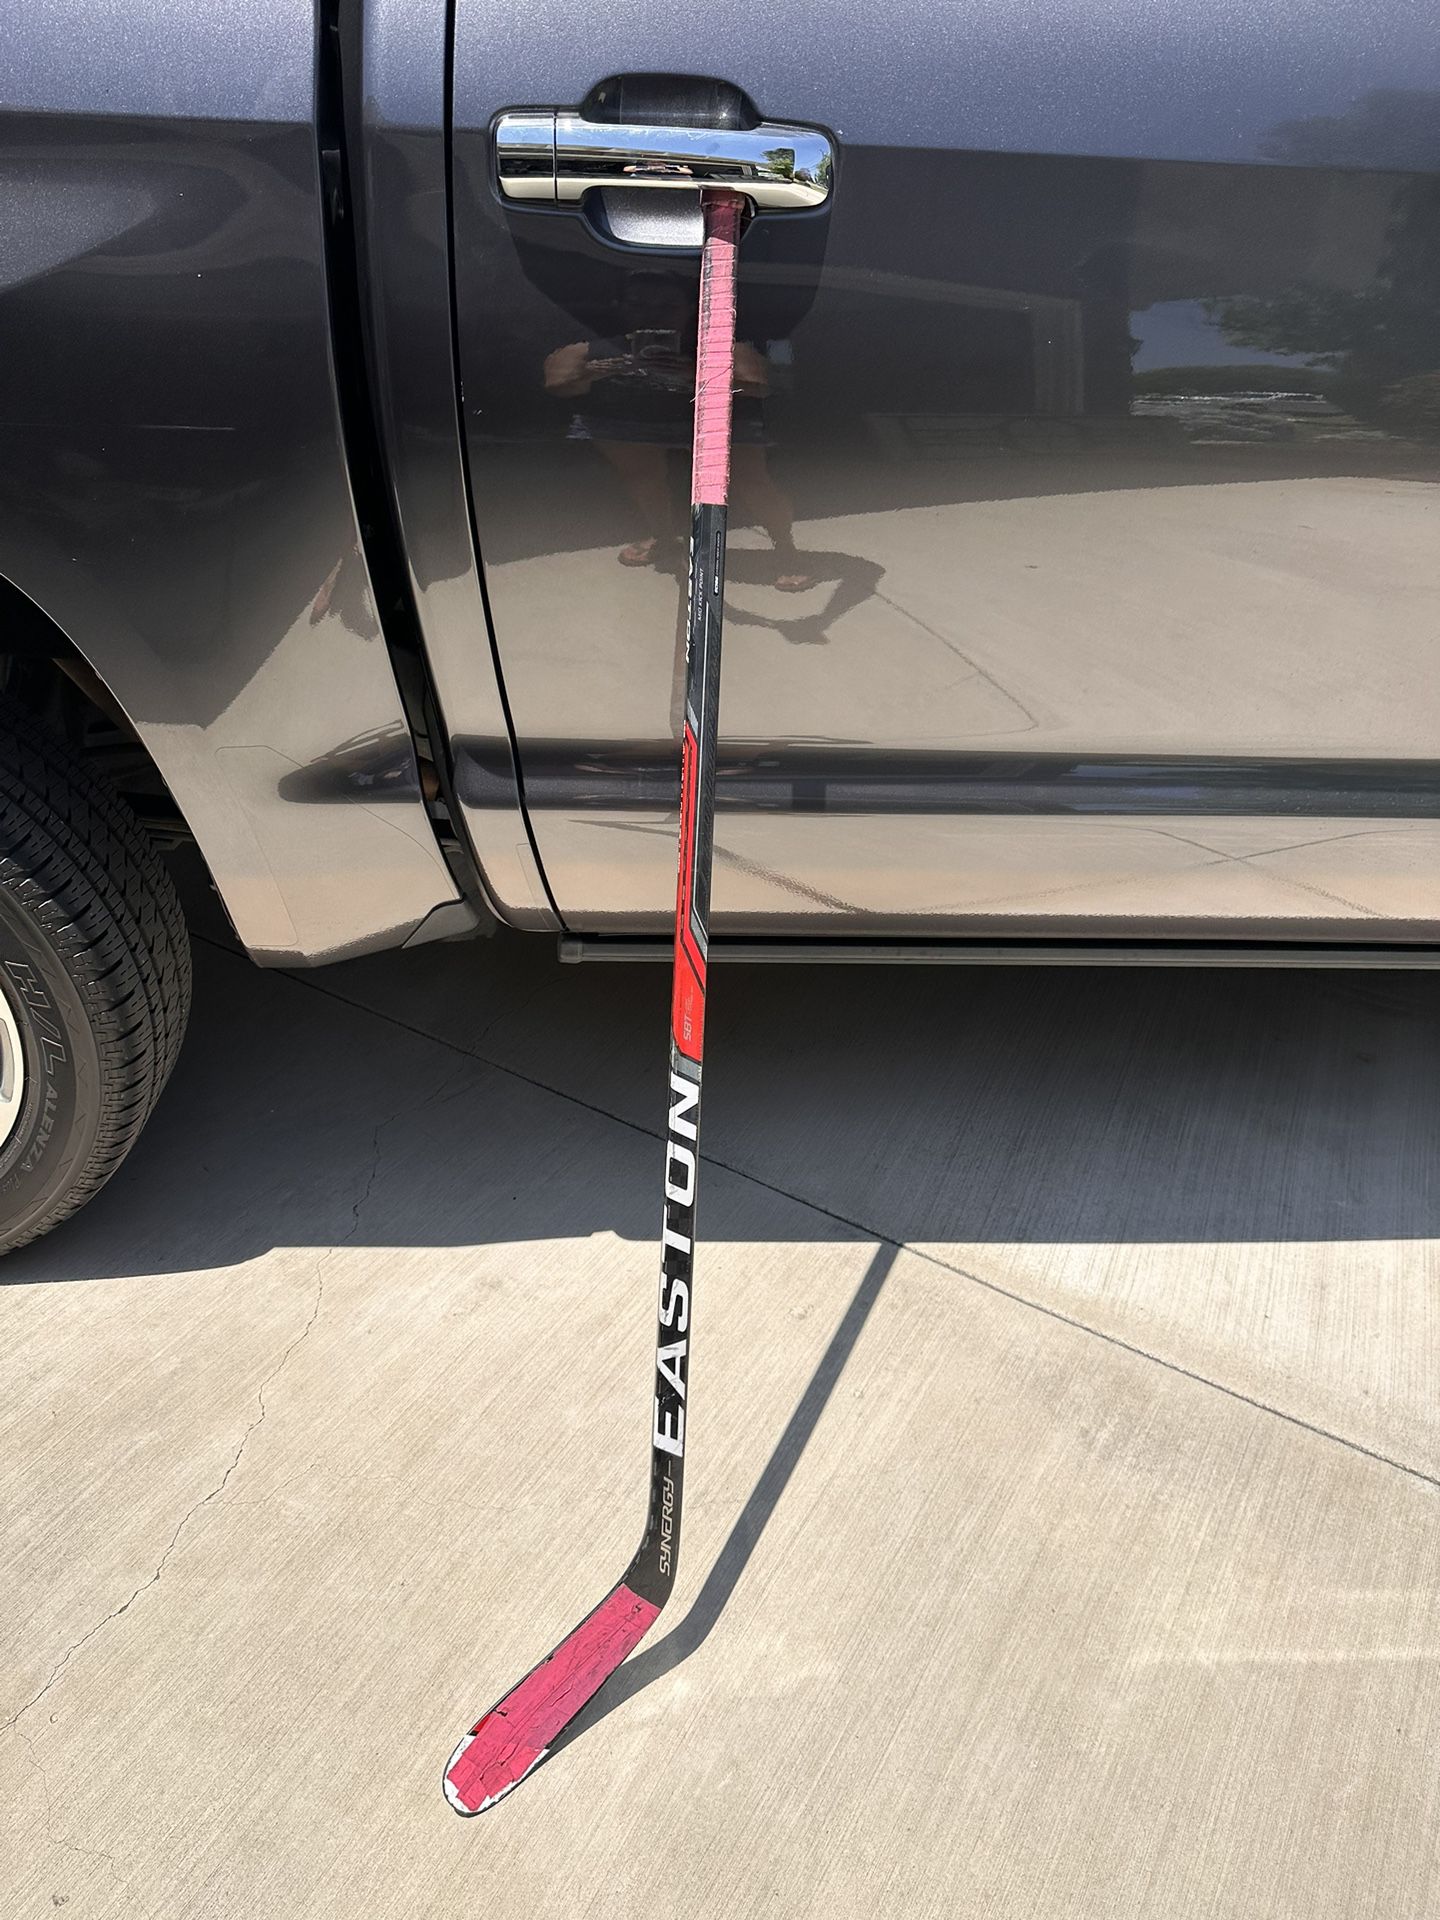 easton carbon fiber hockey stick